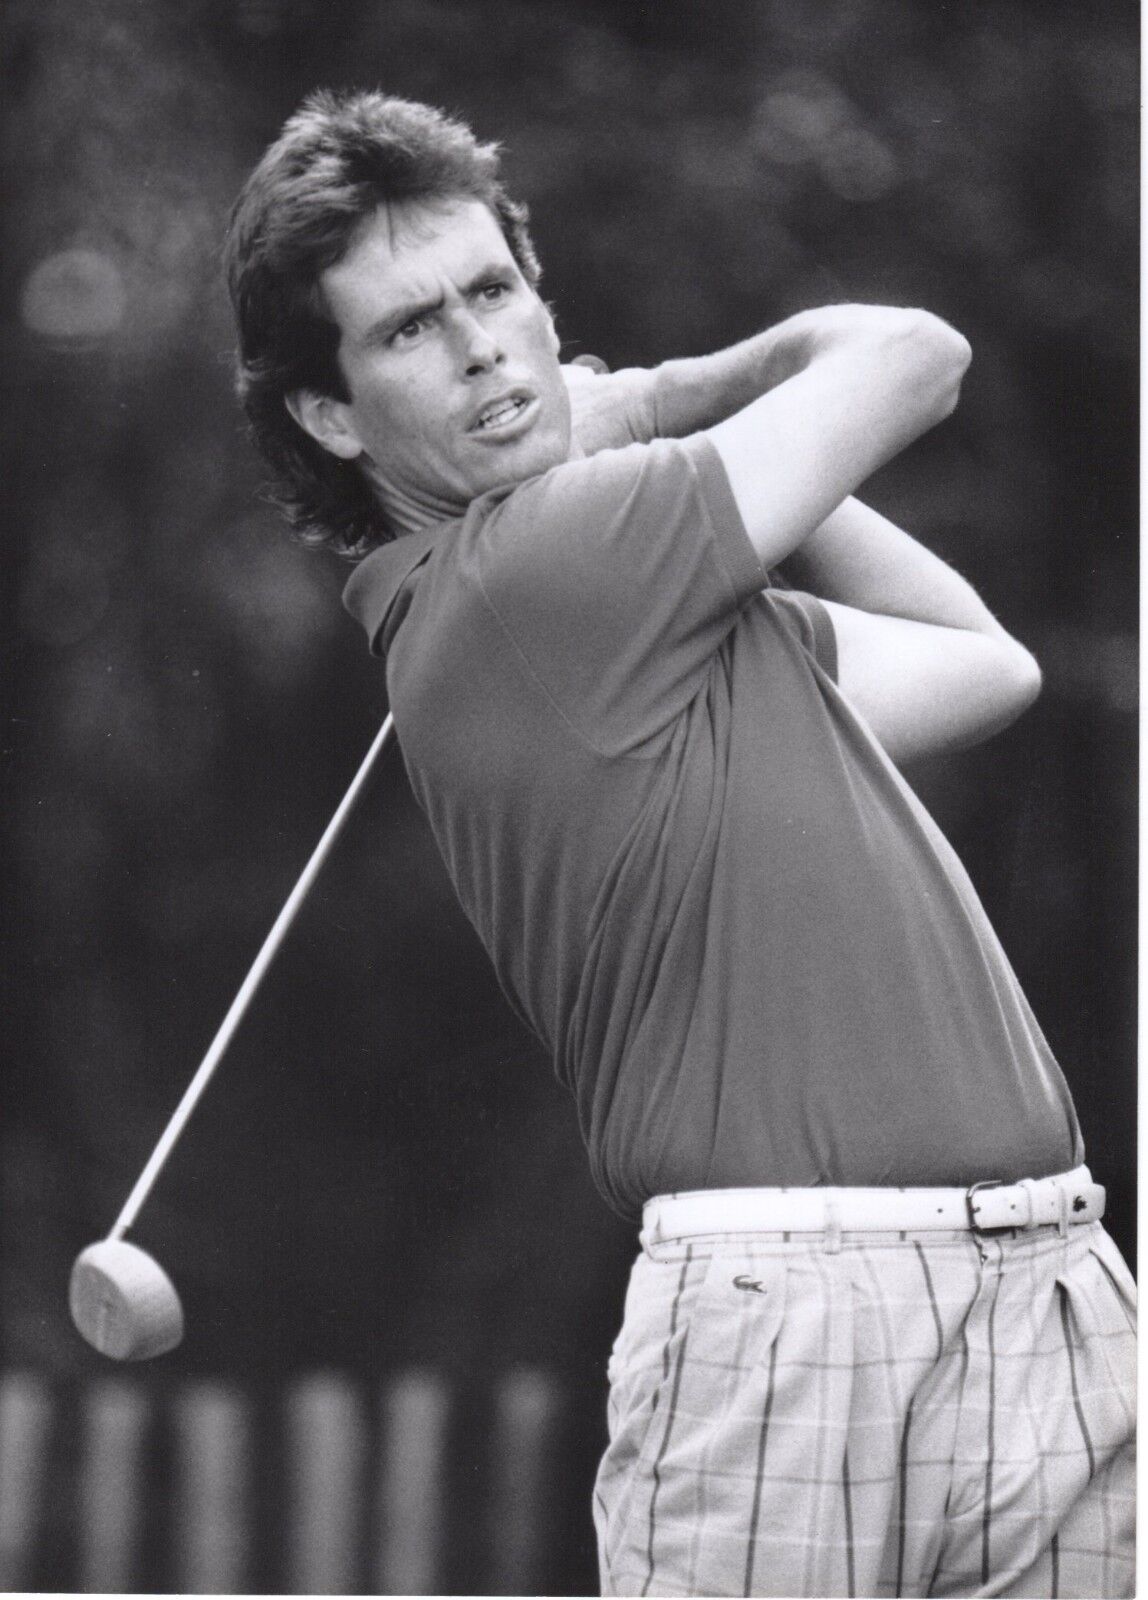 Original Press Photo Golf Ian Baker-Finch Australia May 1988 (3)